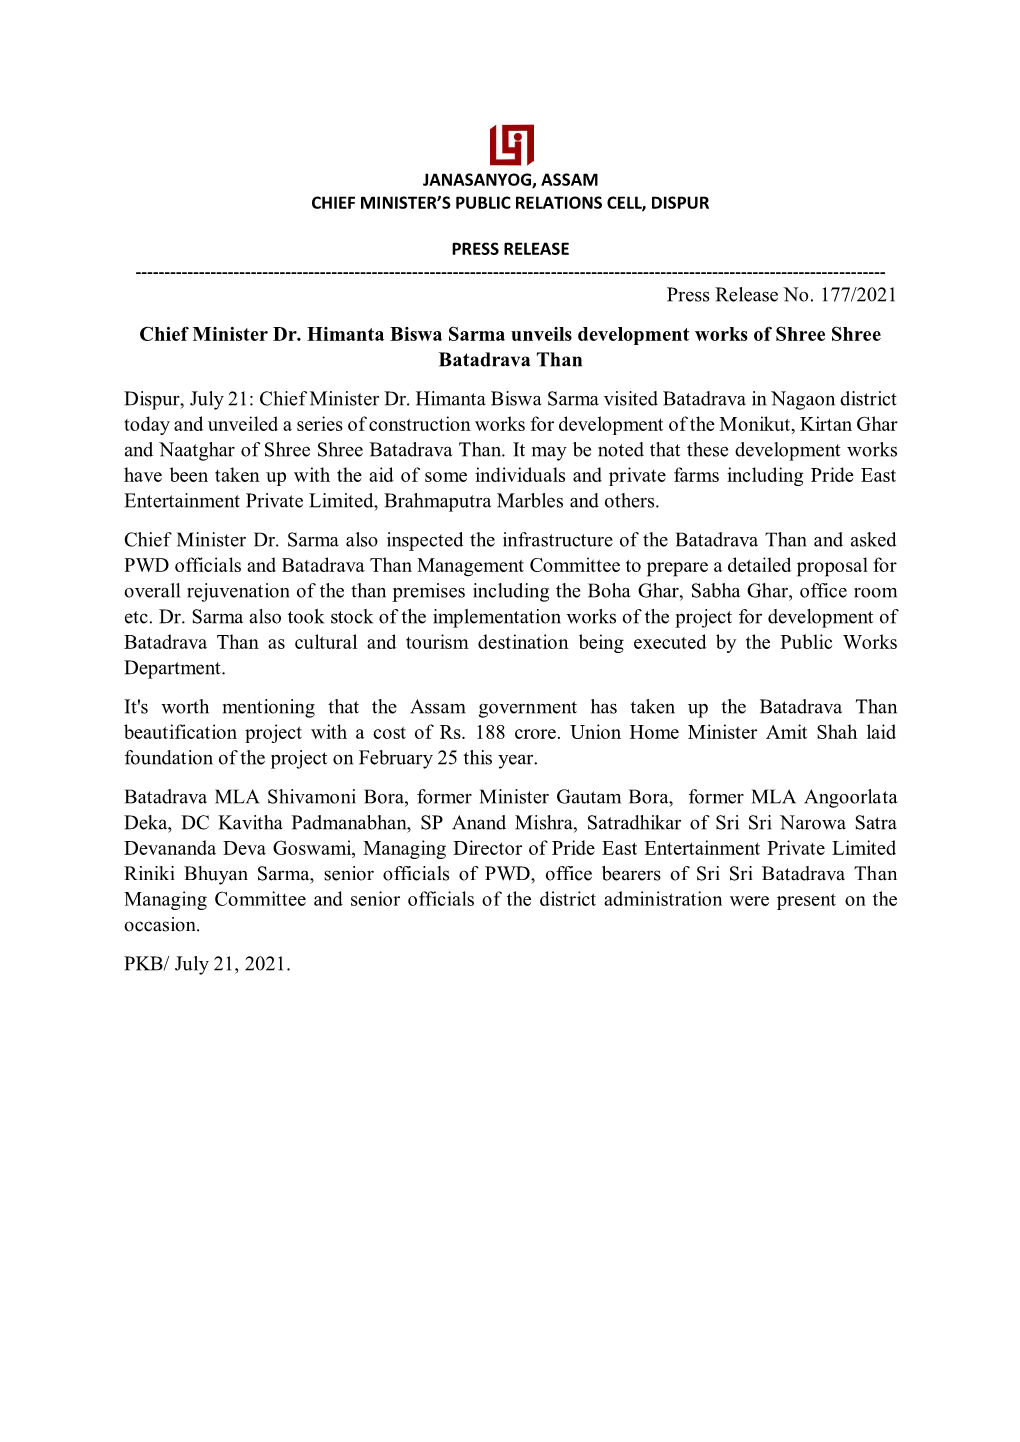 Press Release No. 177/2021 Chief Minister Dr. Himanta Biswa Sarma Unveils Development Works of Shree Shree Batadrava Than Dispur, July 21: Chief Minister Dr